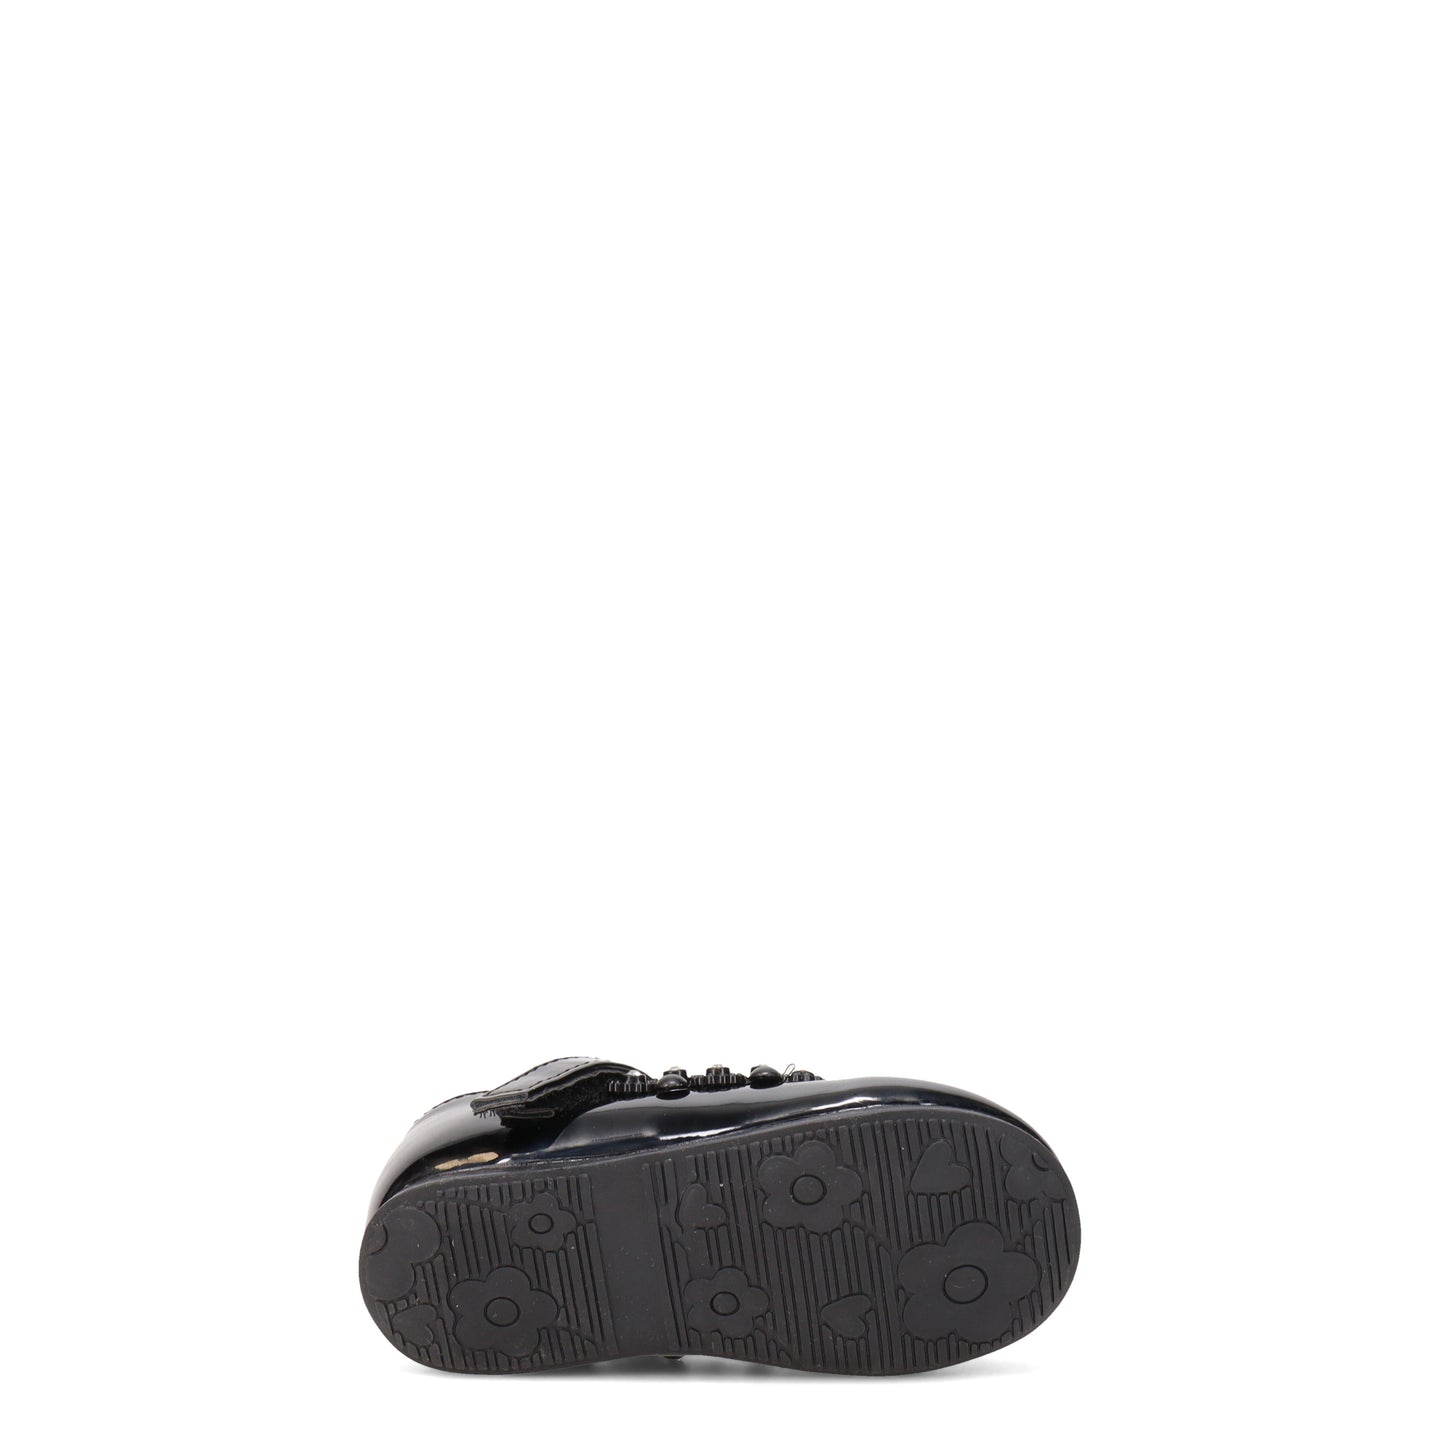 Peltz Shoes  Girl's Josmo Patent Mary Jane - Infant & Toddler BLACK PATENT 85099J-BLK